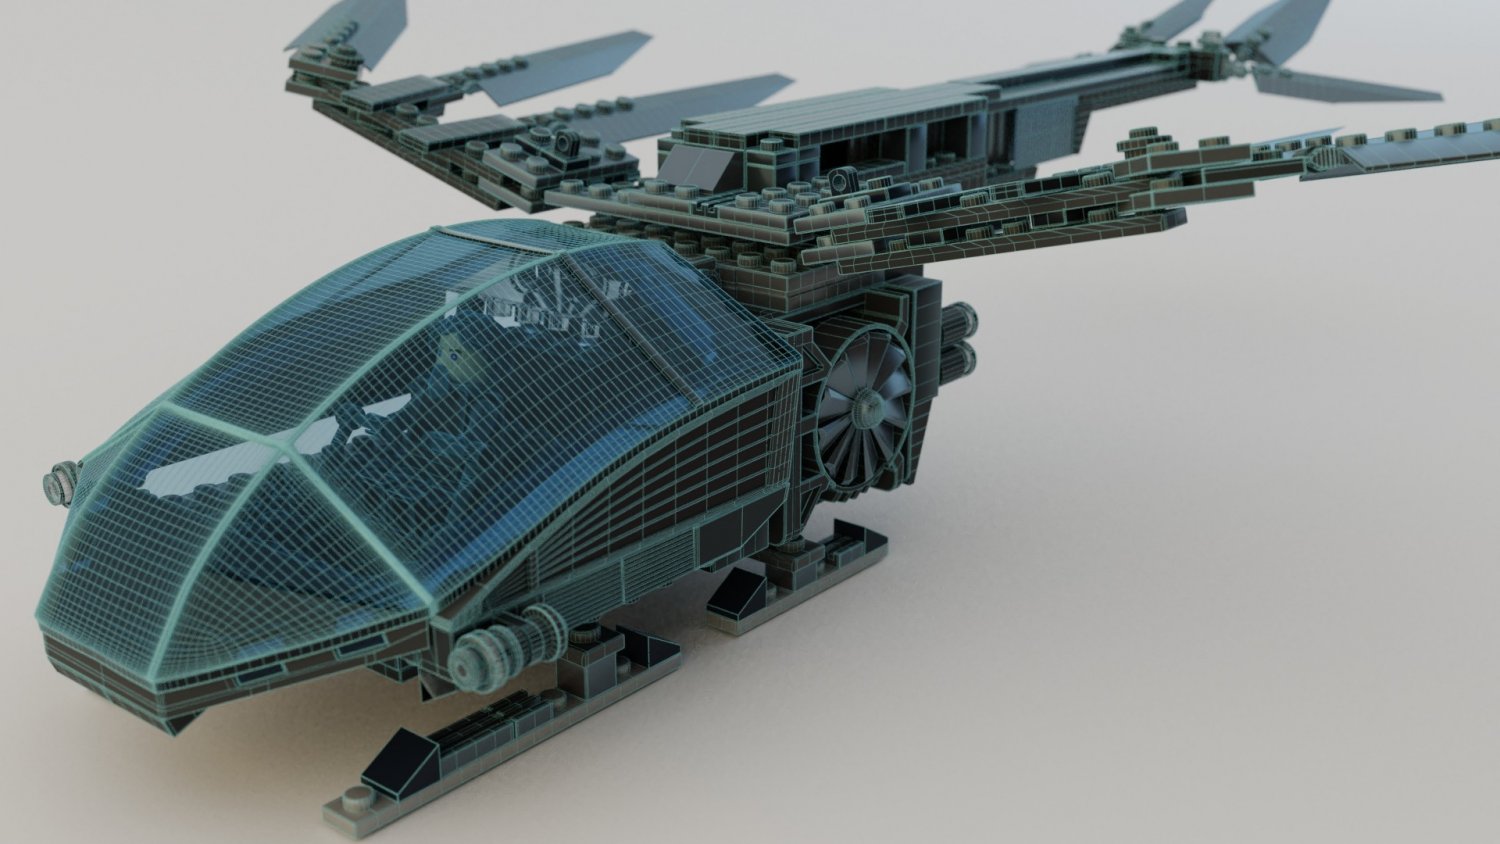 Lego - A 3D model collection by Yndor-Tador. - Sketchfab